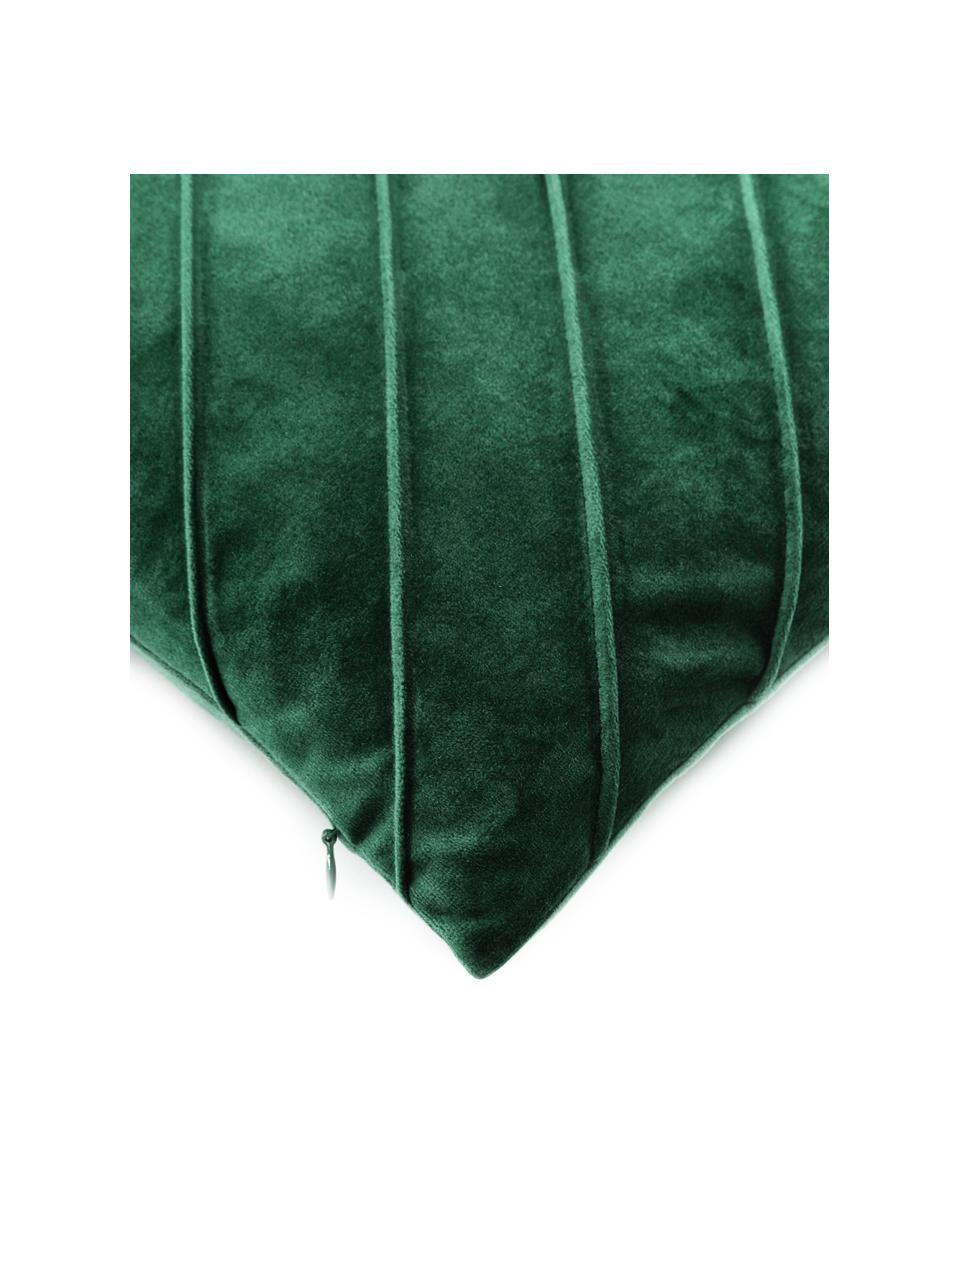 Housse de coussin en velours vert foncé Leyla, Velours (100 % polyester), Vert, larg. 30 x long. 50 cm